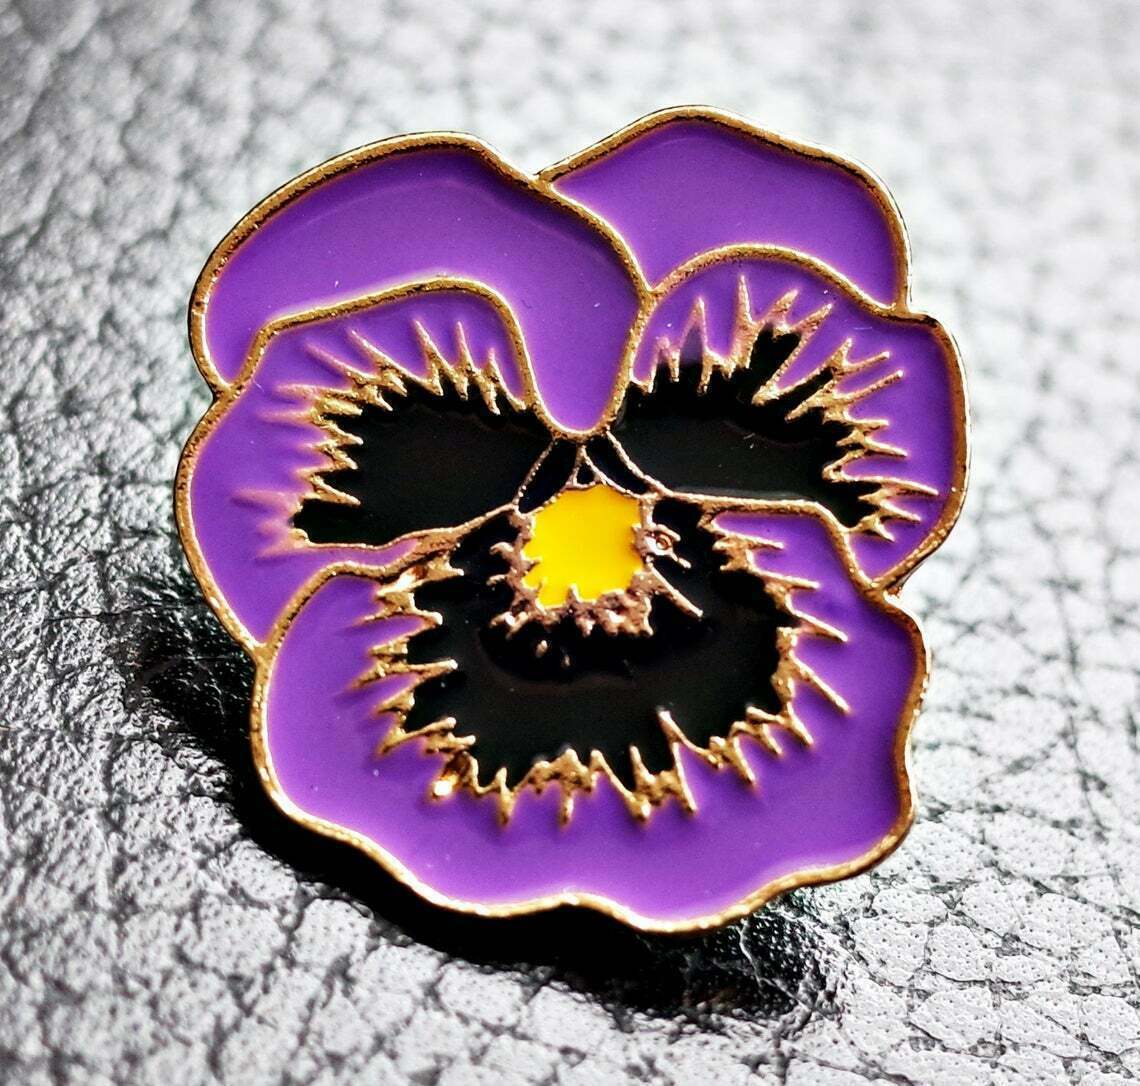 Forget Me Not Flower Alzheimer's Awareness purple PIN Badge new